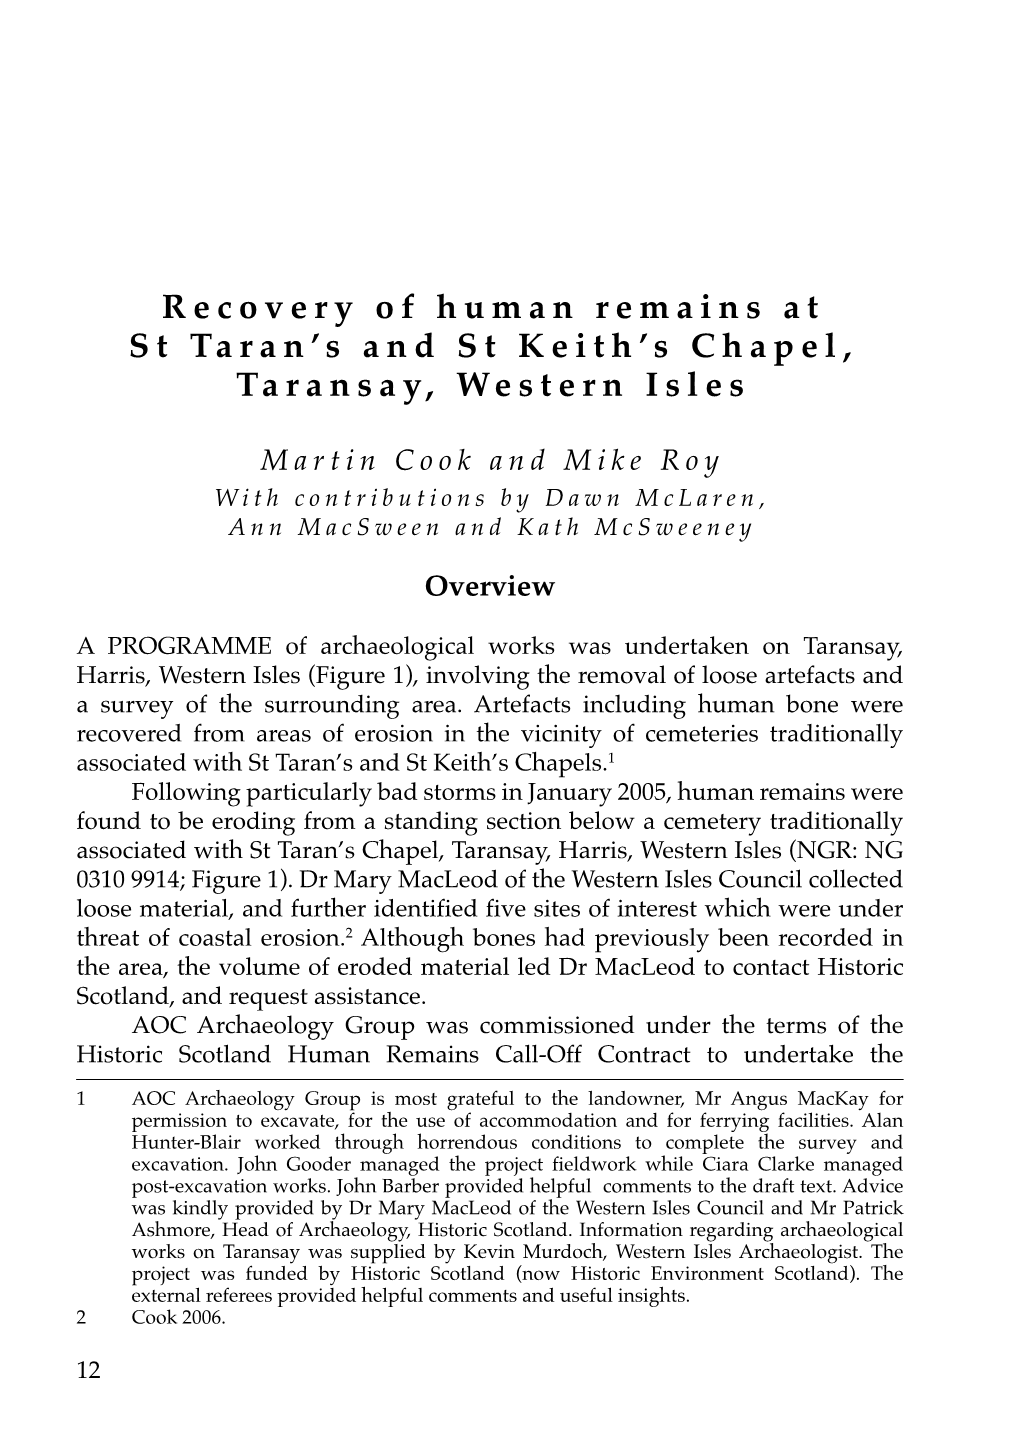 Recovery of Human Remains at St Taran's and St Keith's Chapel, Taransay, Western Isles